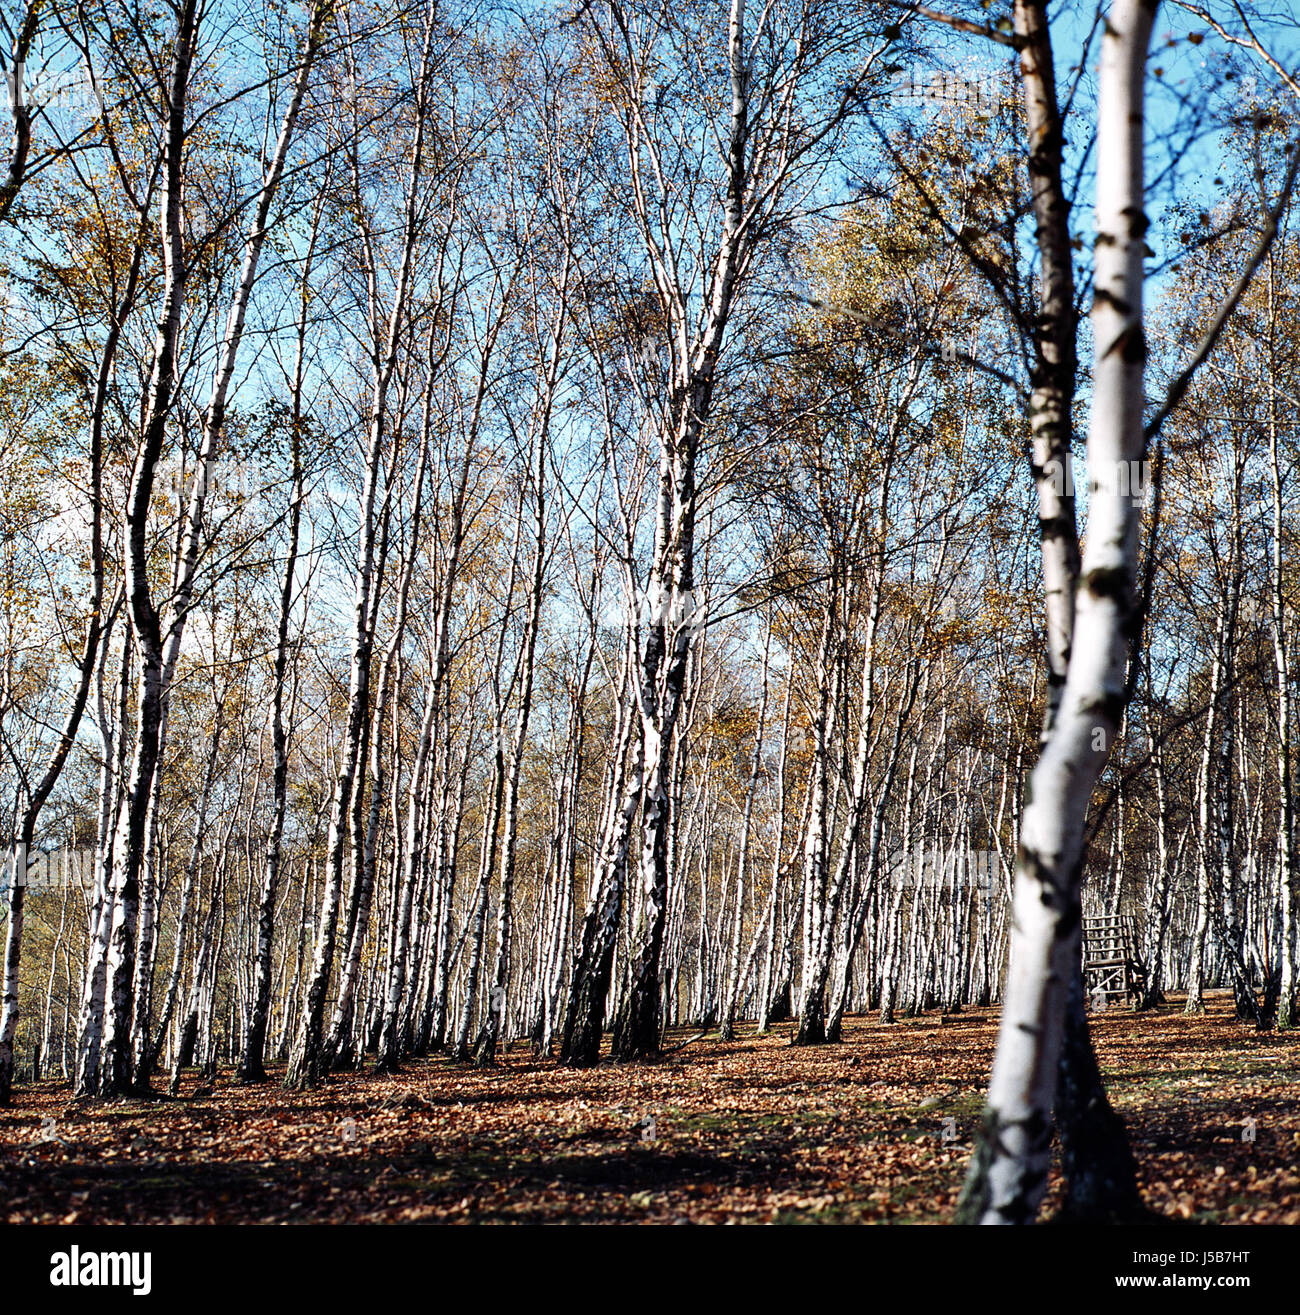 Árboles árbol abedules ramas primavera bosque de abedules follaje deja caer la naturaleza Foto de stock